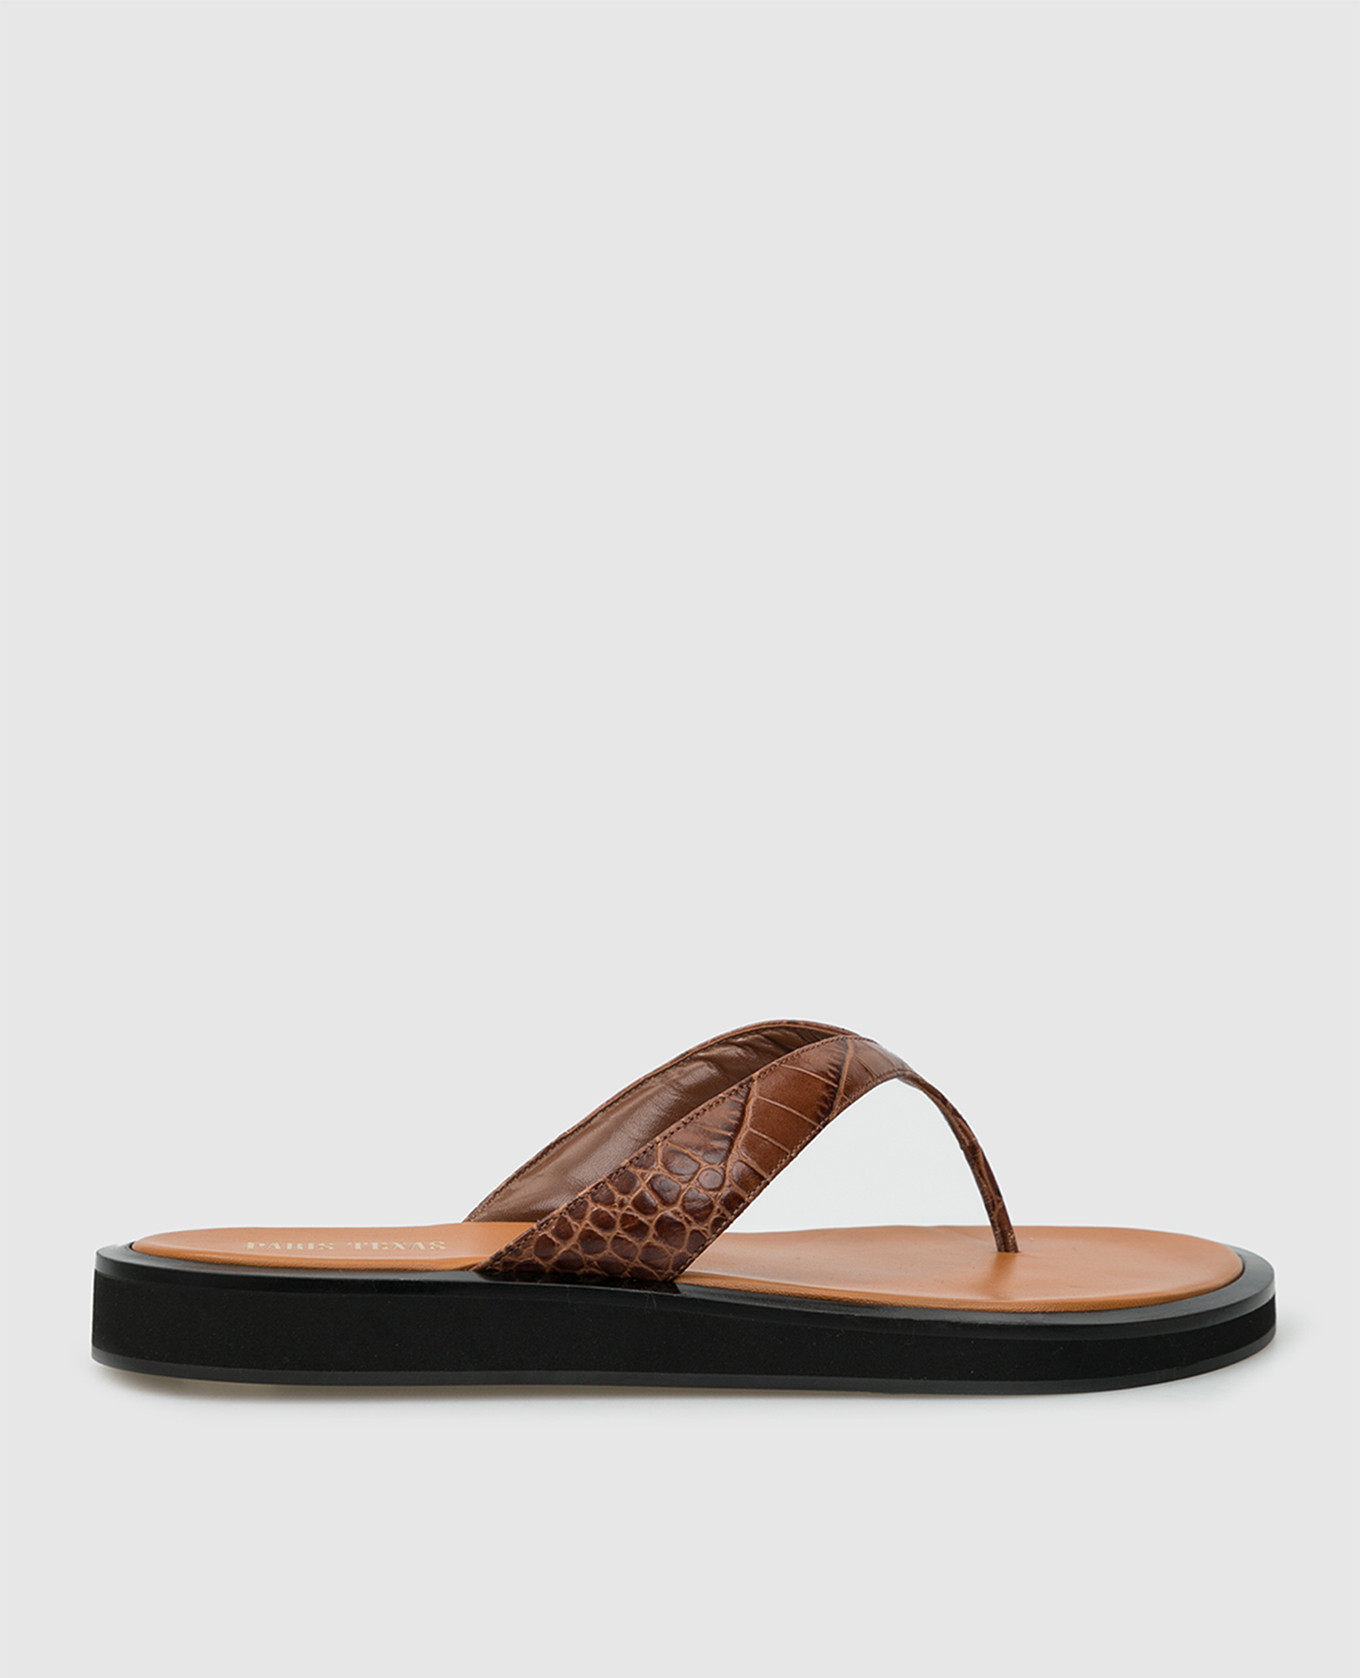 "Brooklyn" tan leather slippers